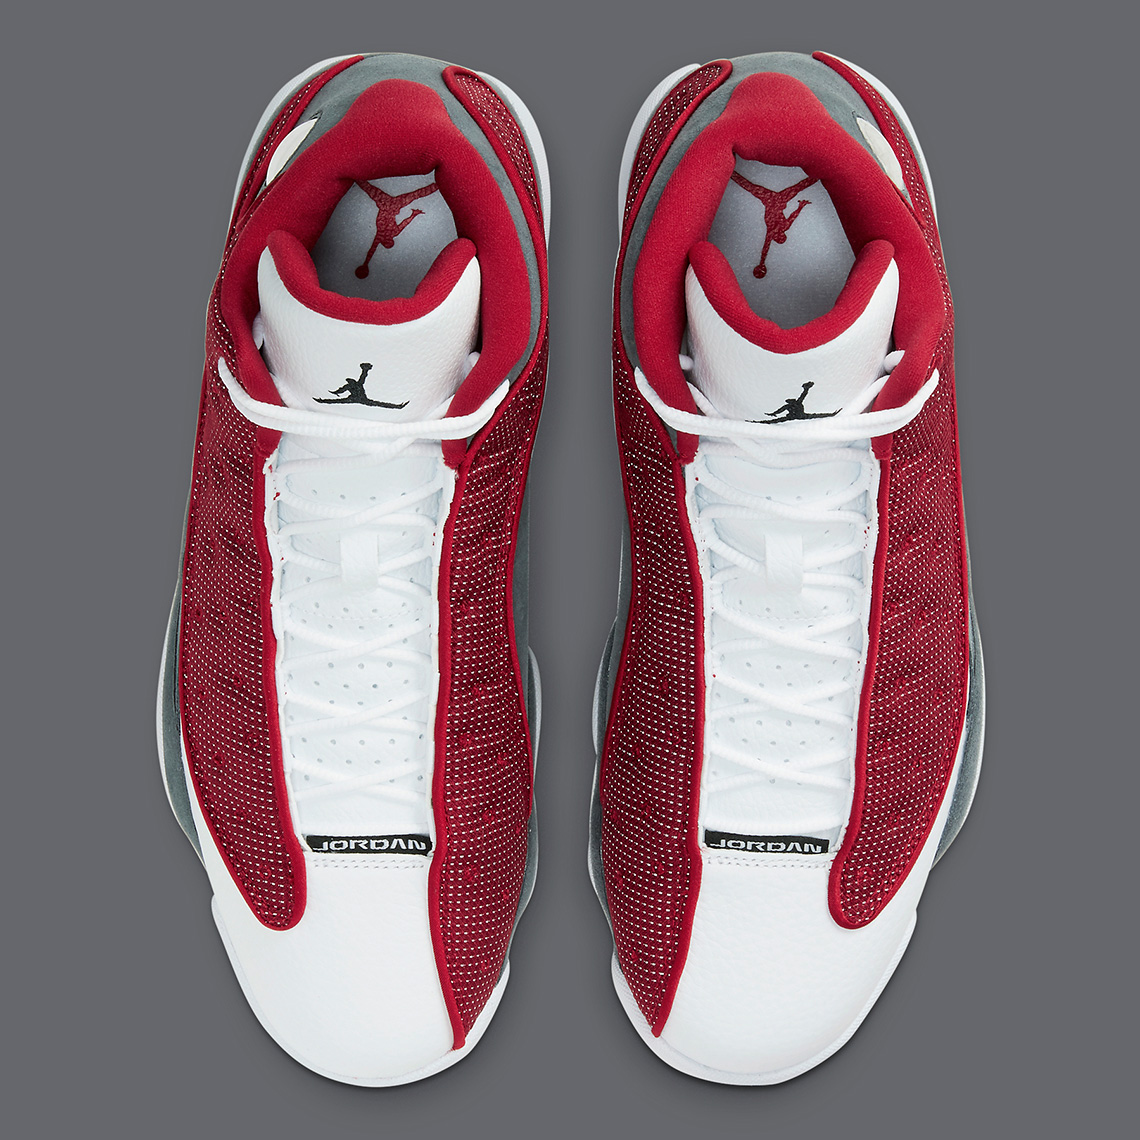 Air Jordan 13 Red Flint 2021 Release Date 3